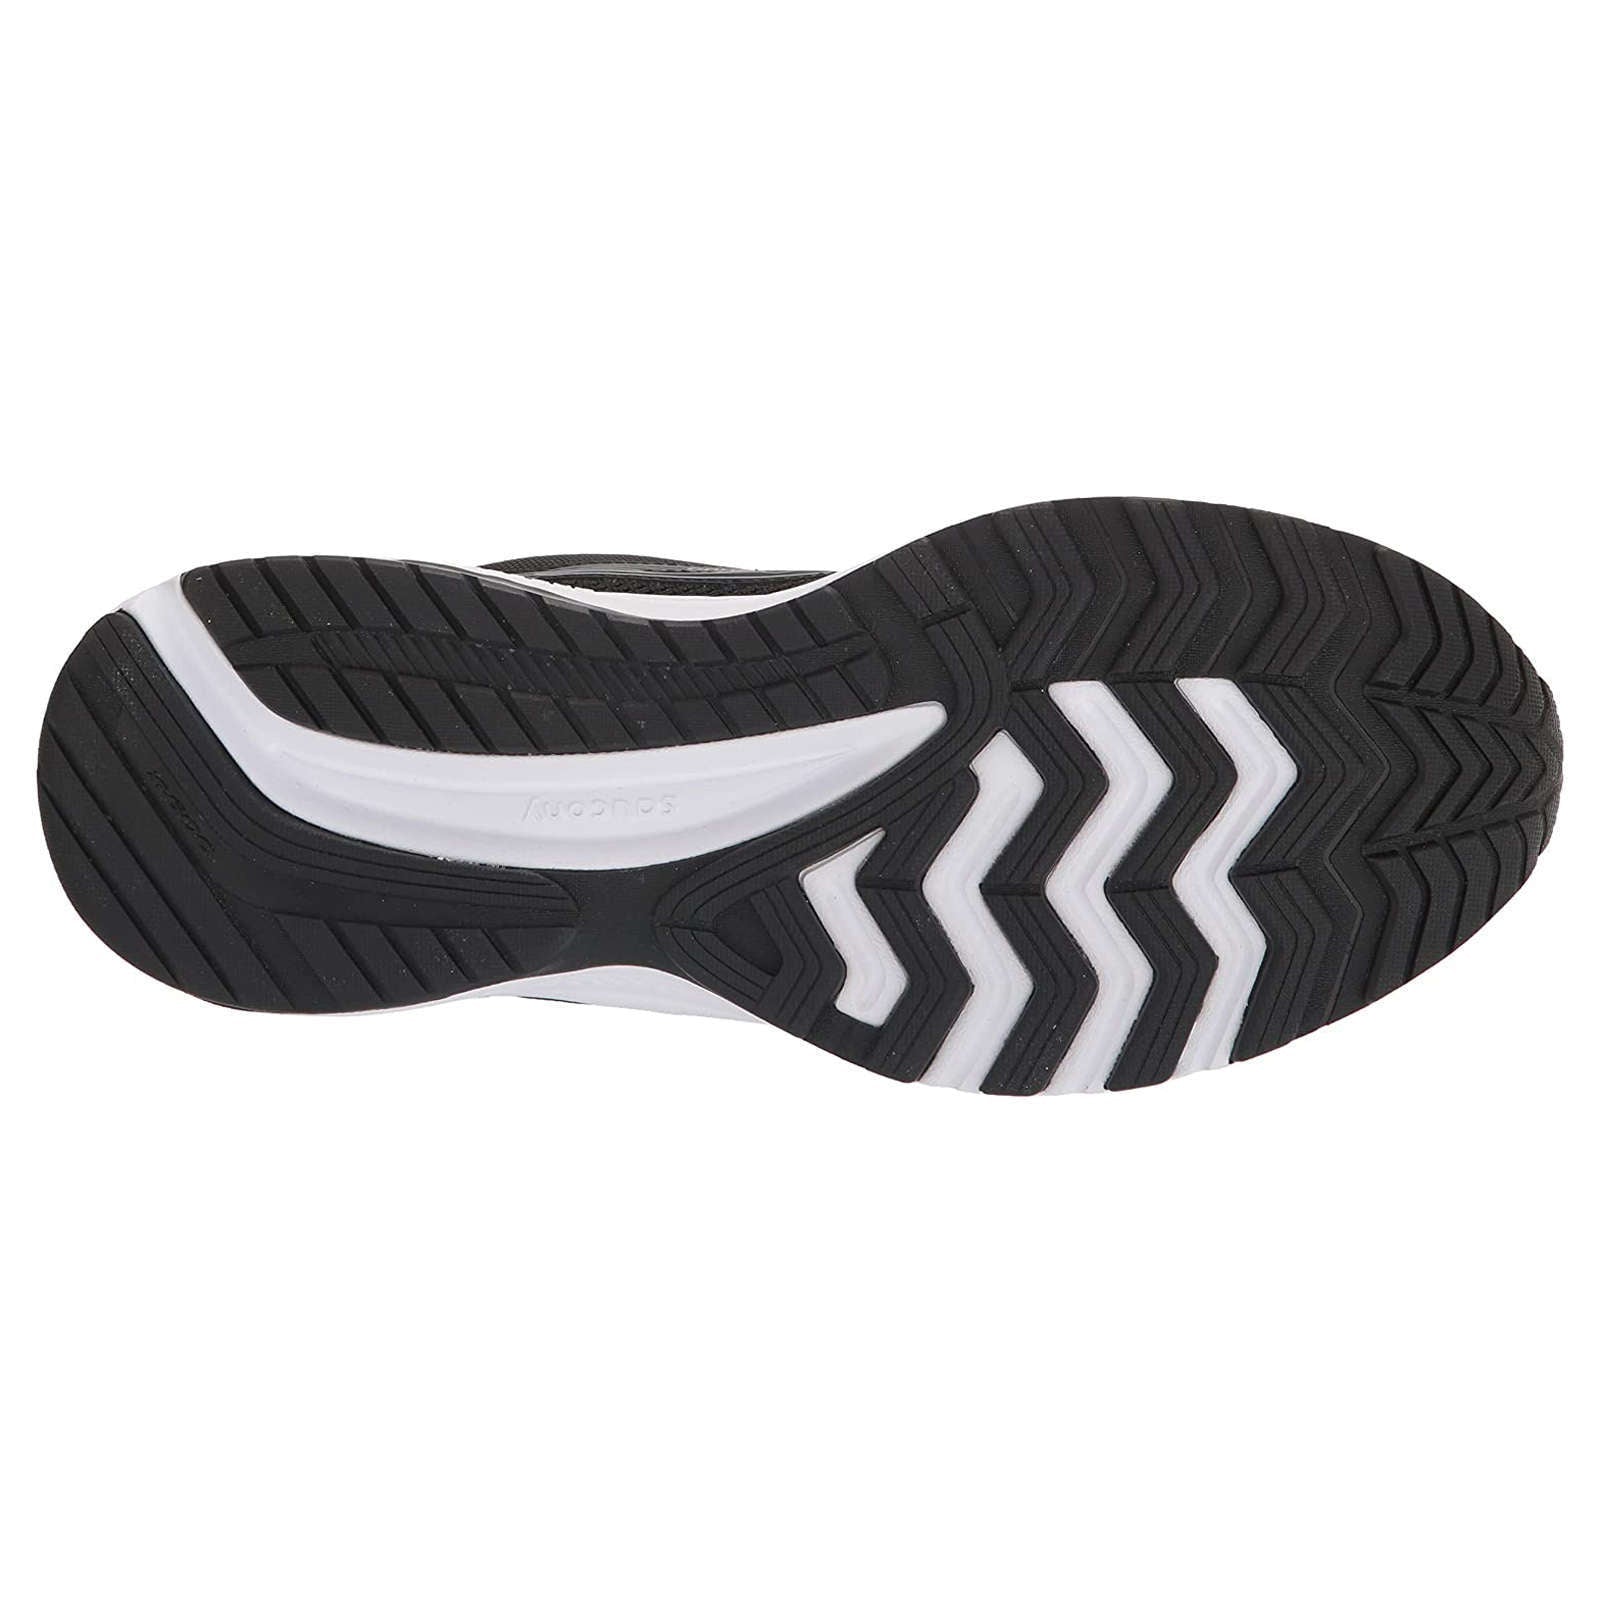 Saucony Cohesion 15 Synthetic Textile Men's Low-Top Sneakers#color_black white